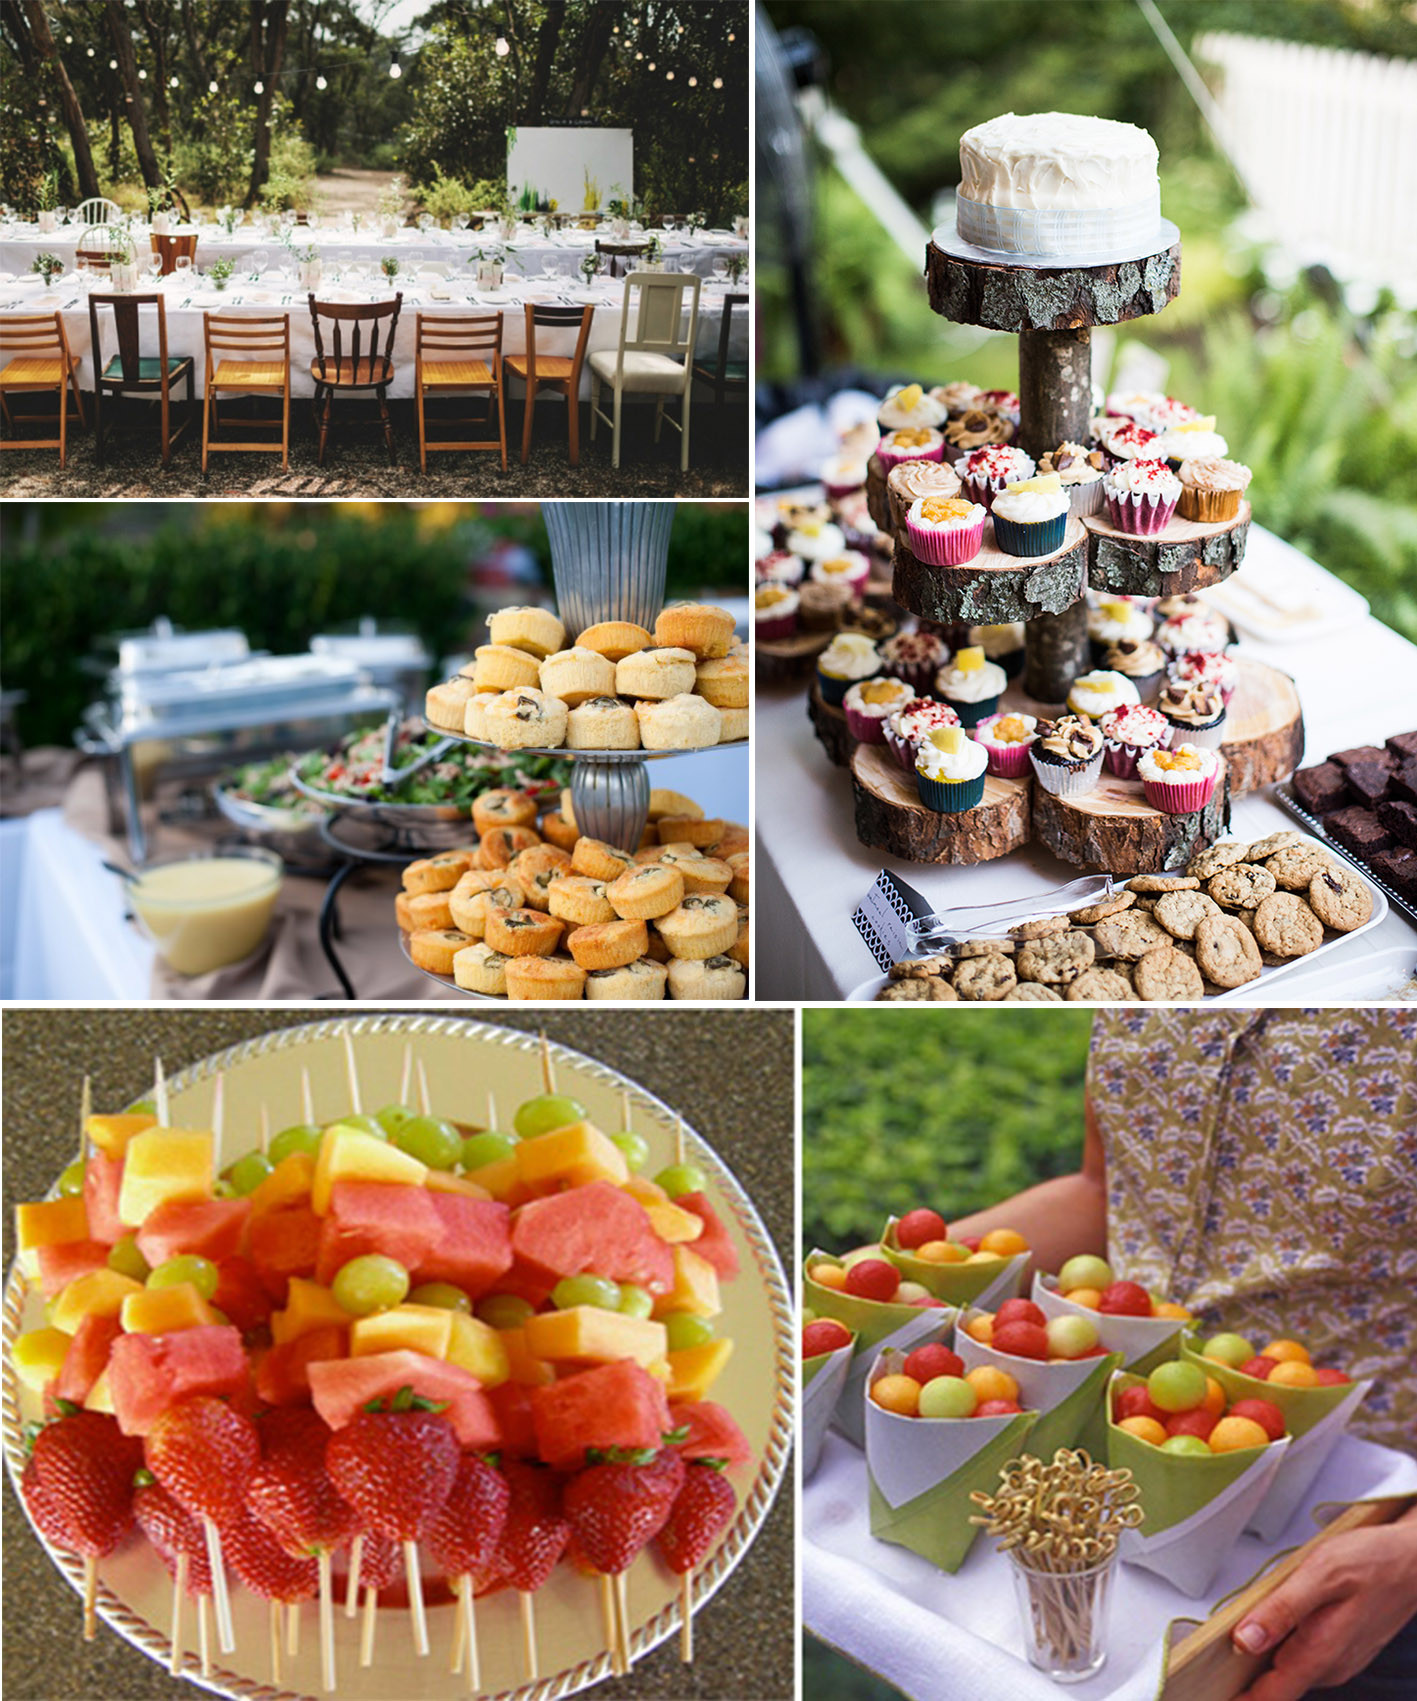 Food Ideas For Backyard Party
 How to play a backyard themed wedding – lianggeyuan123